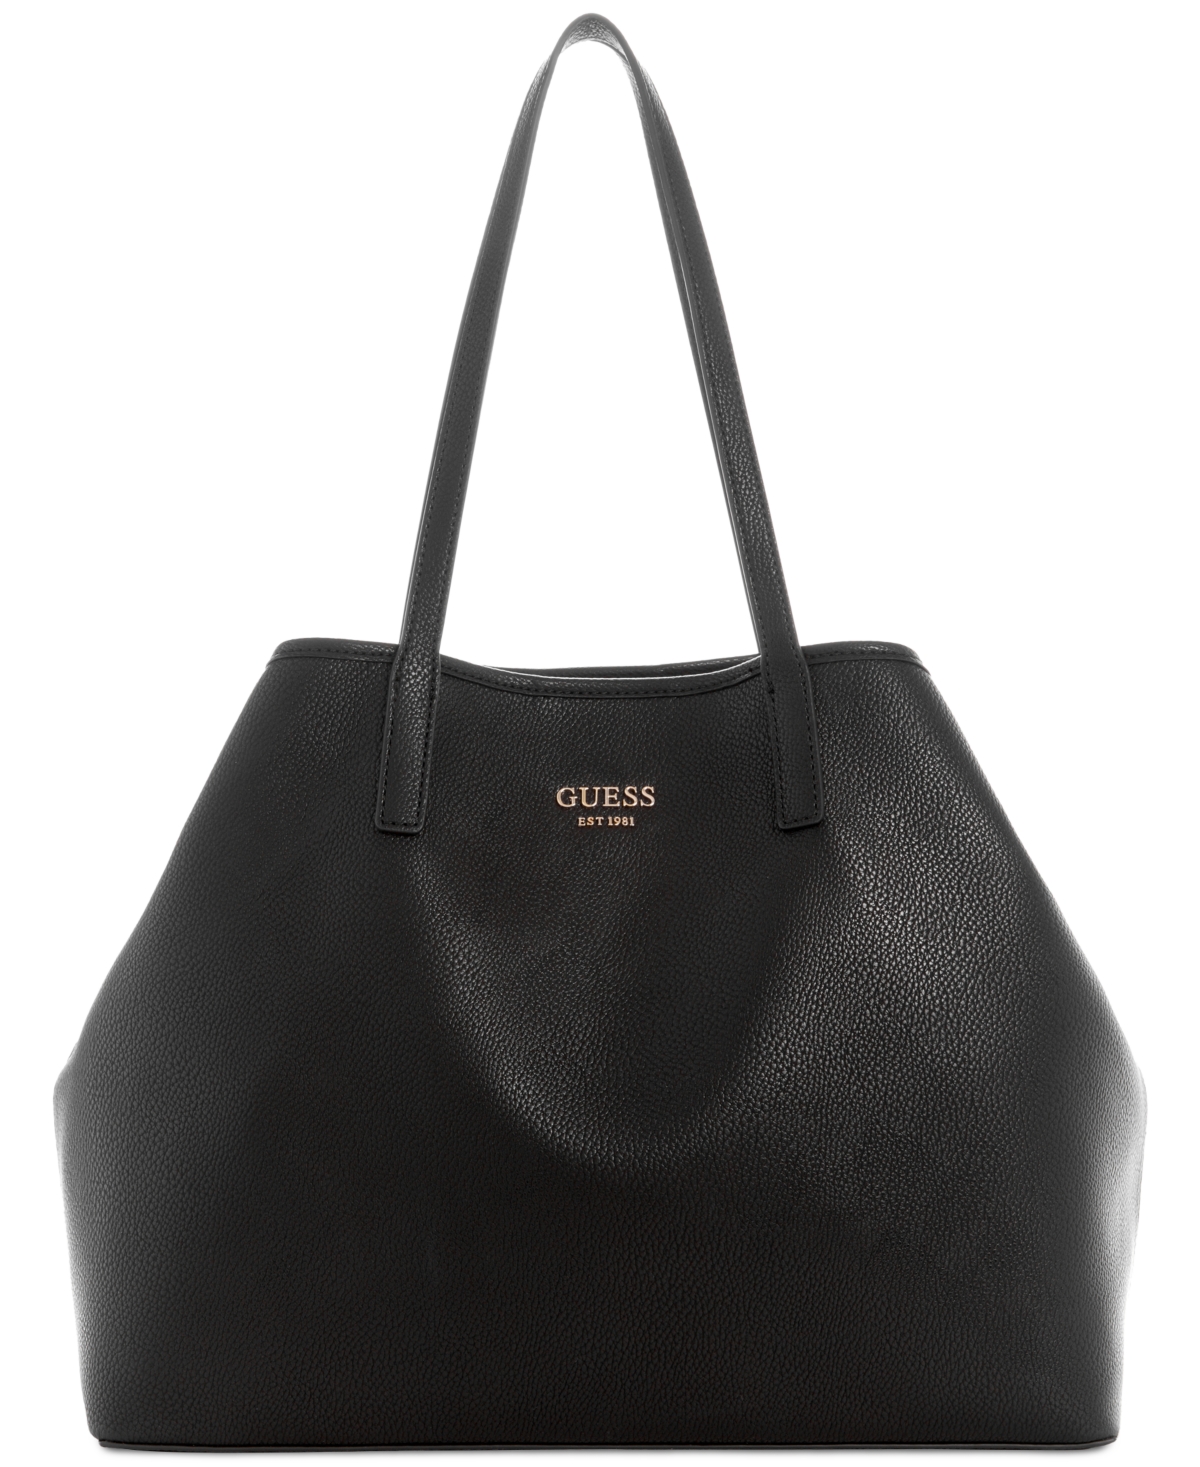 Guess Vikky Large Tote Black, Shopping Bag